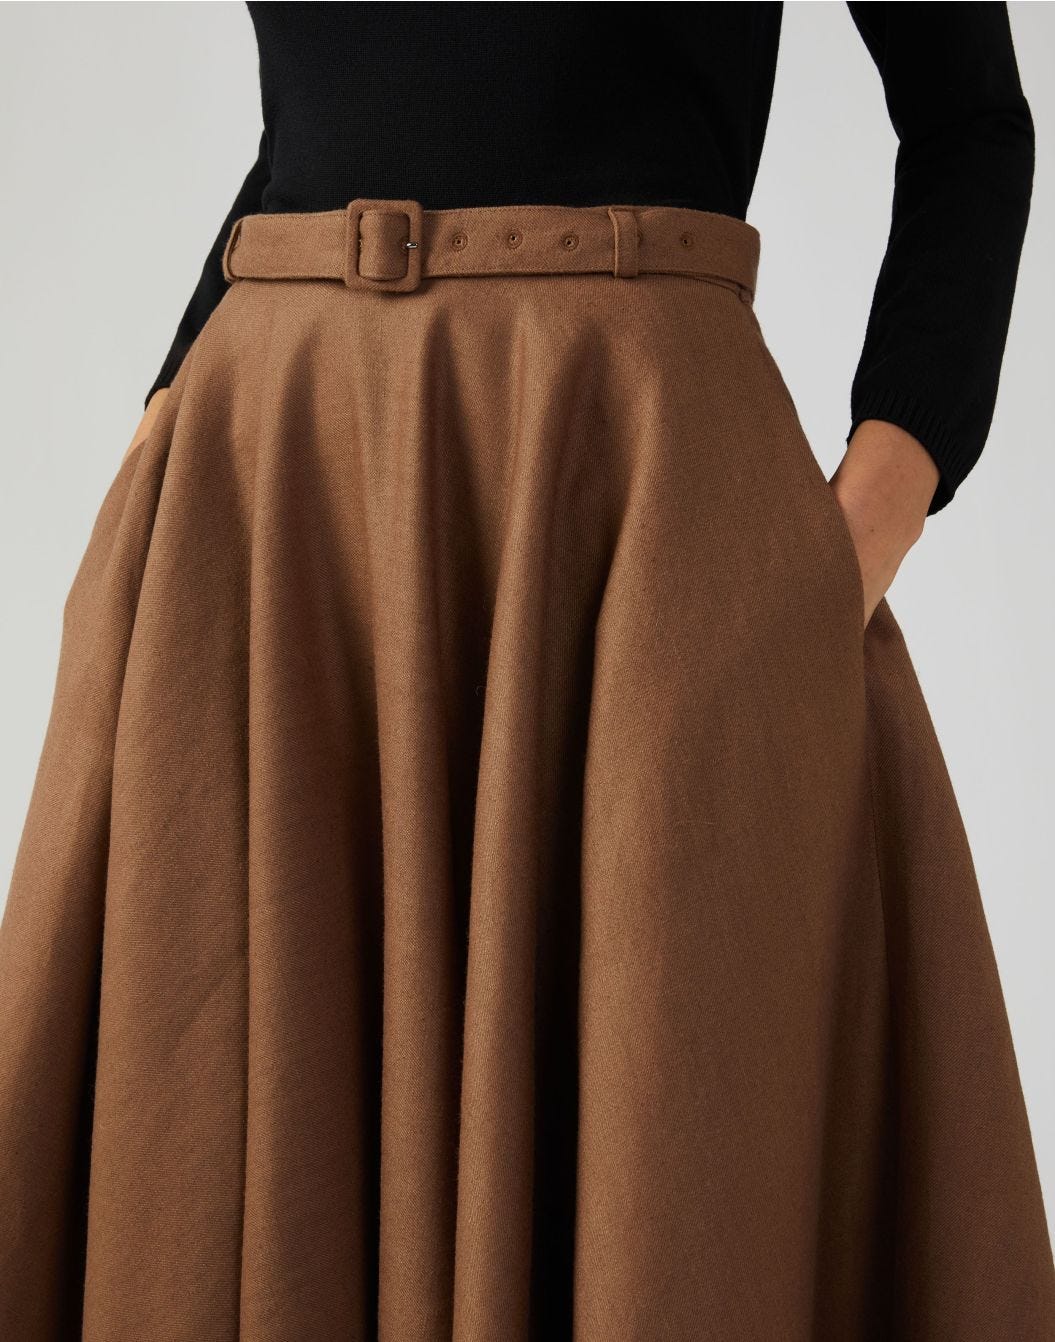 Flared midi skirt in brown wool twill